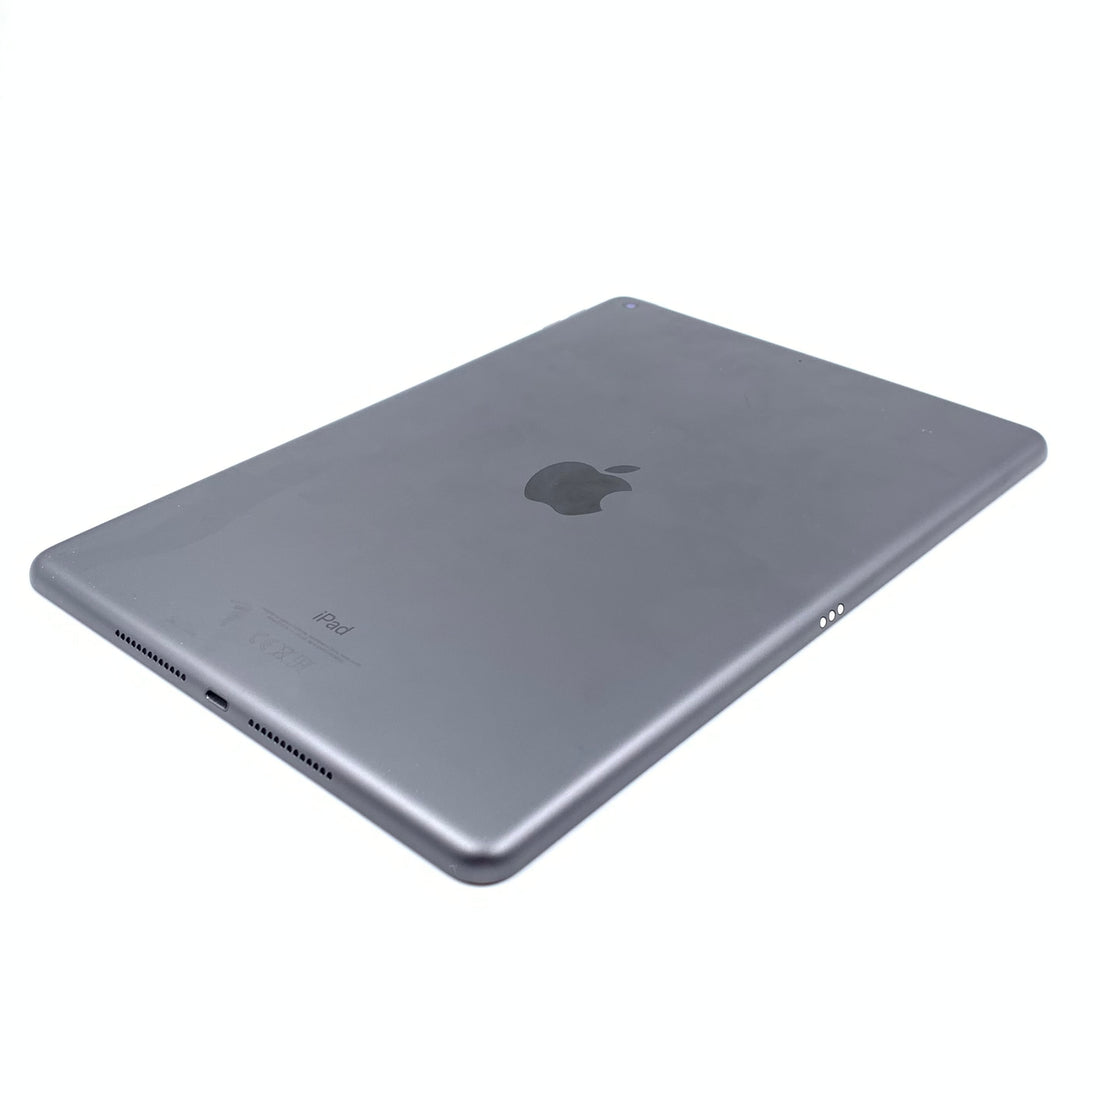 Apple iPad 7 A2197 128GB (seminuevo)